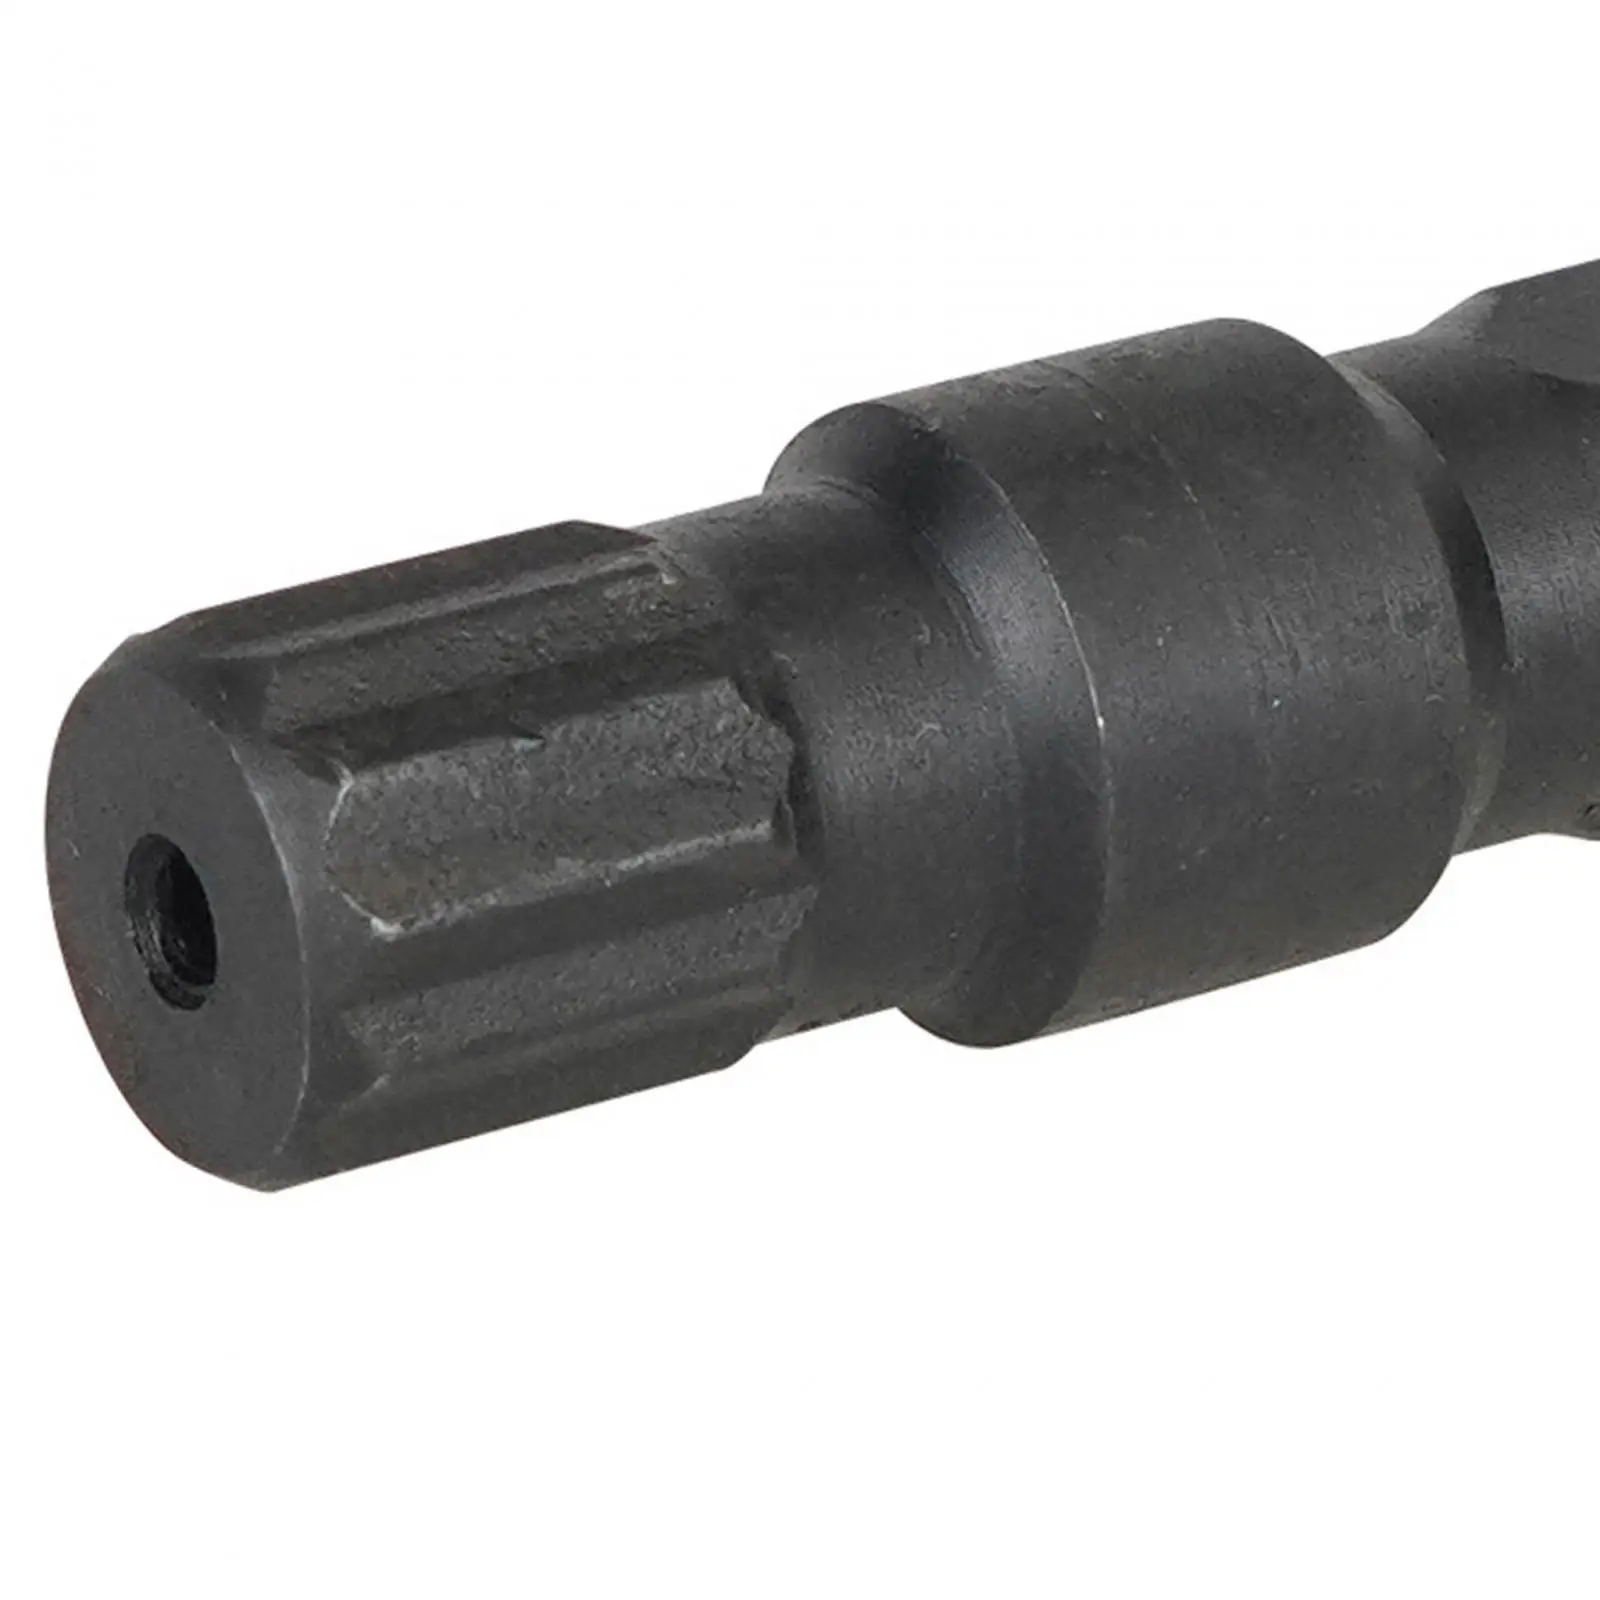 Hinge Pin Tool Accessory Repair Parts 91-78310 for Mercury Mercruiser